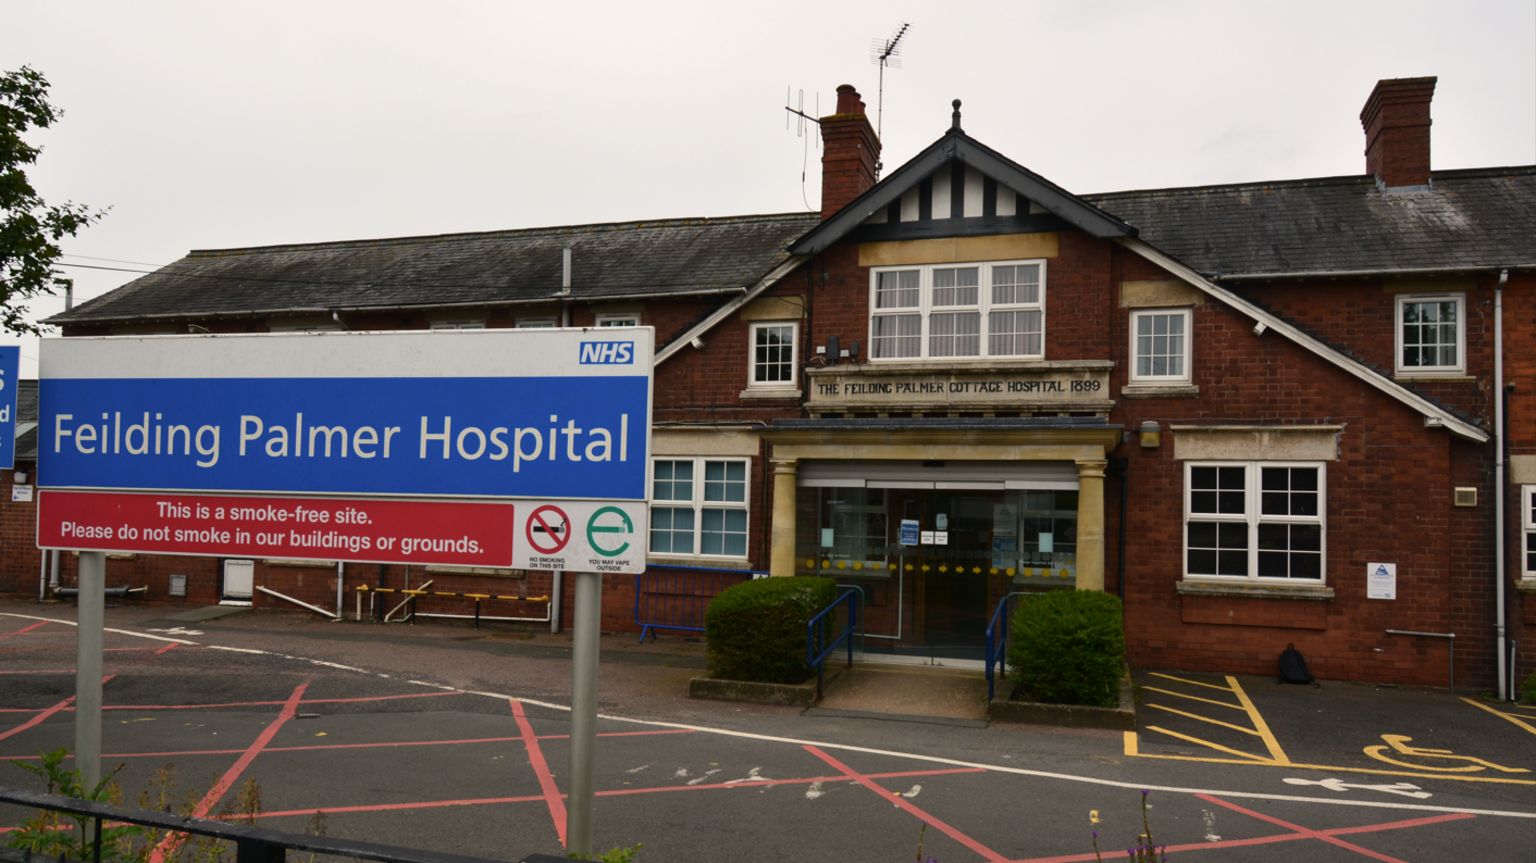 Feilding Palmer Lutterworth hospital front